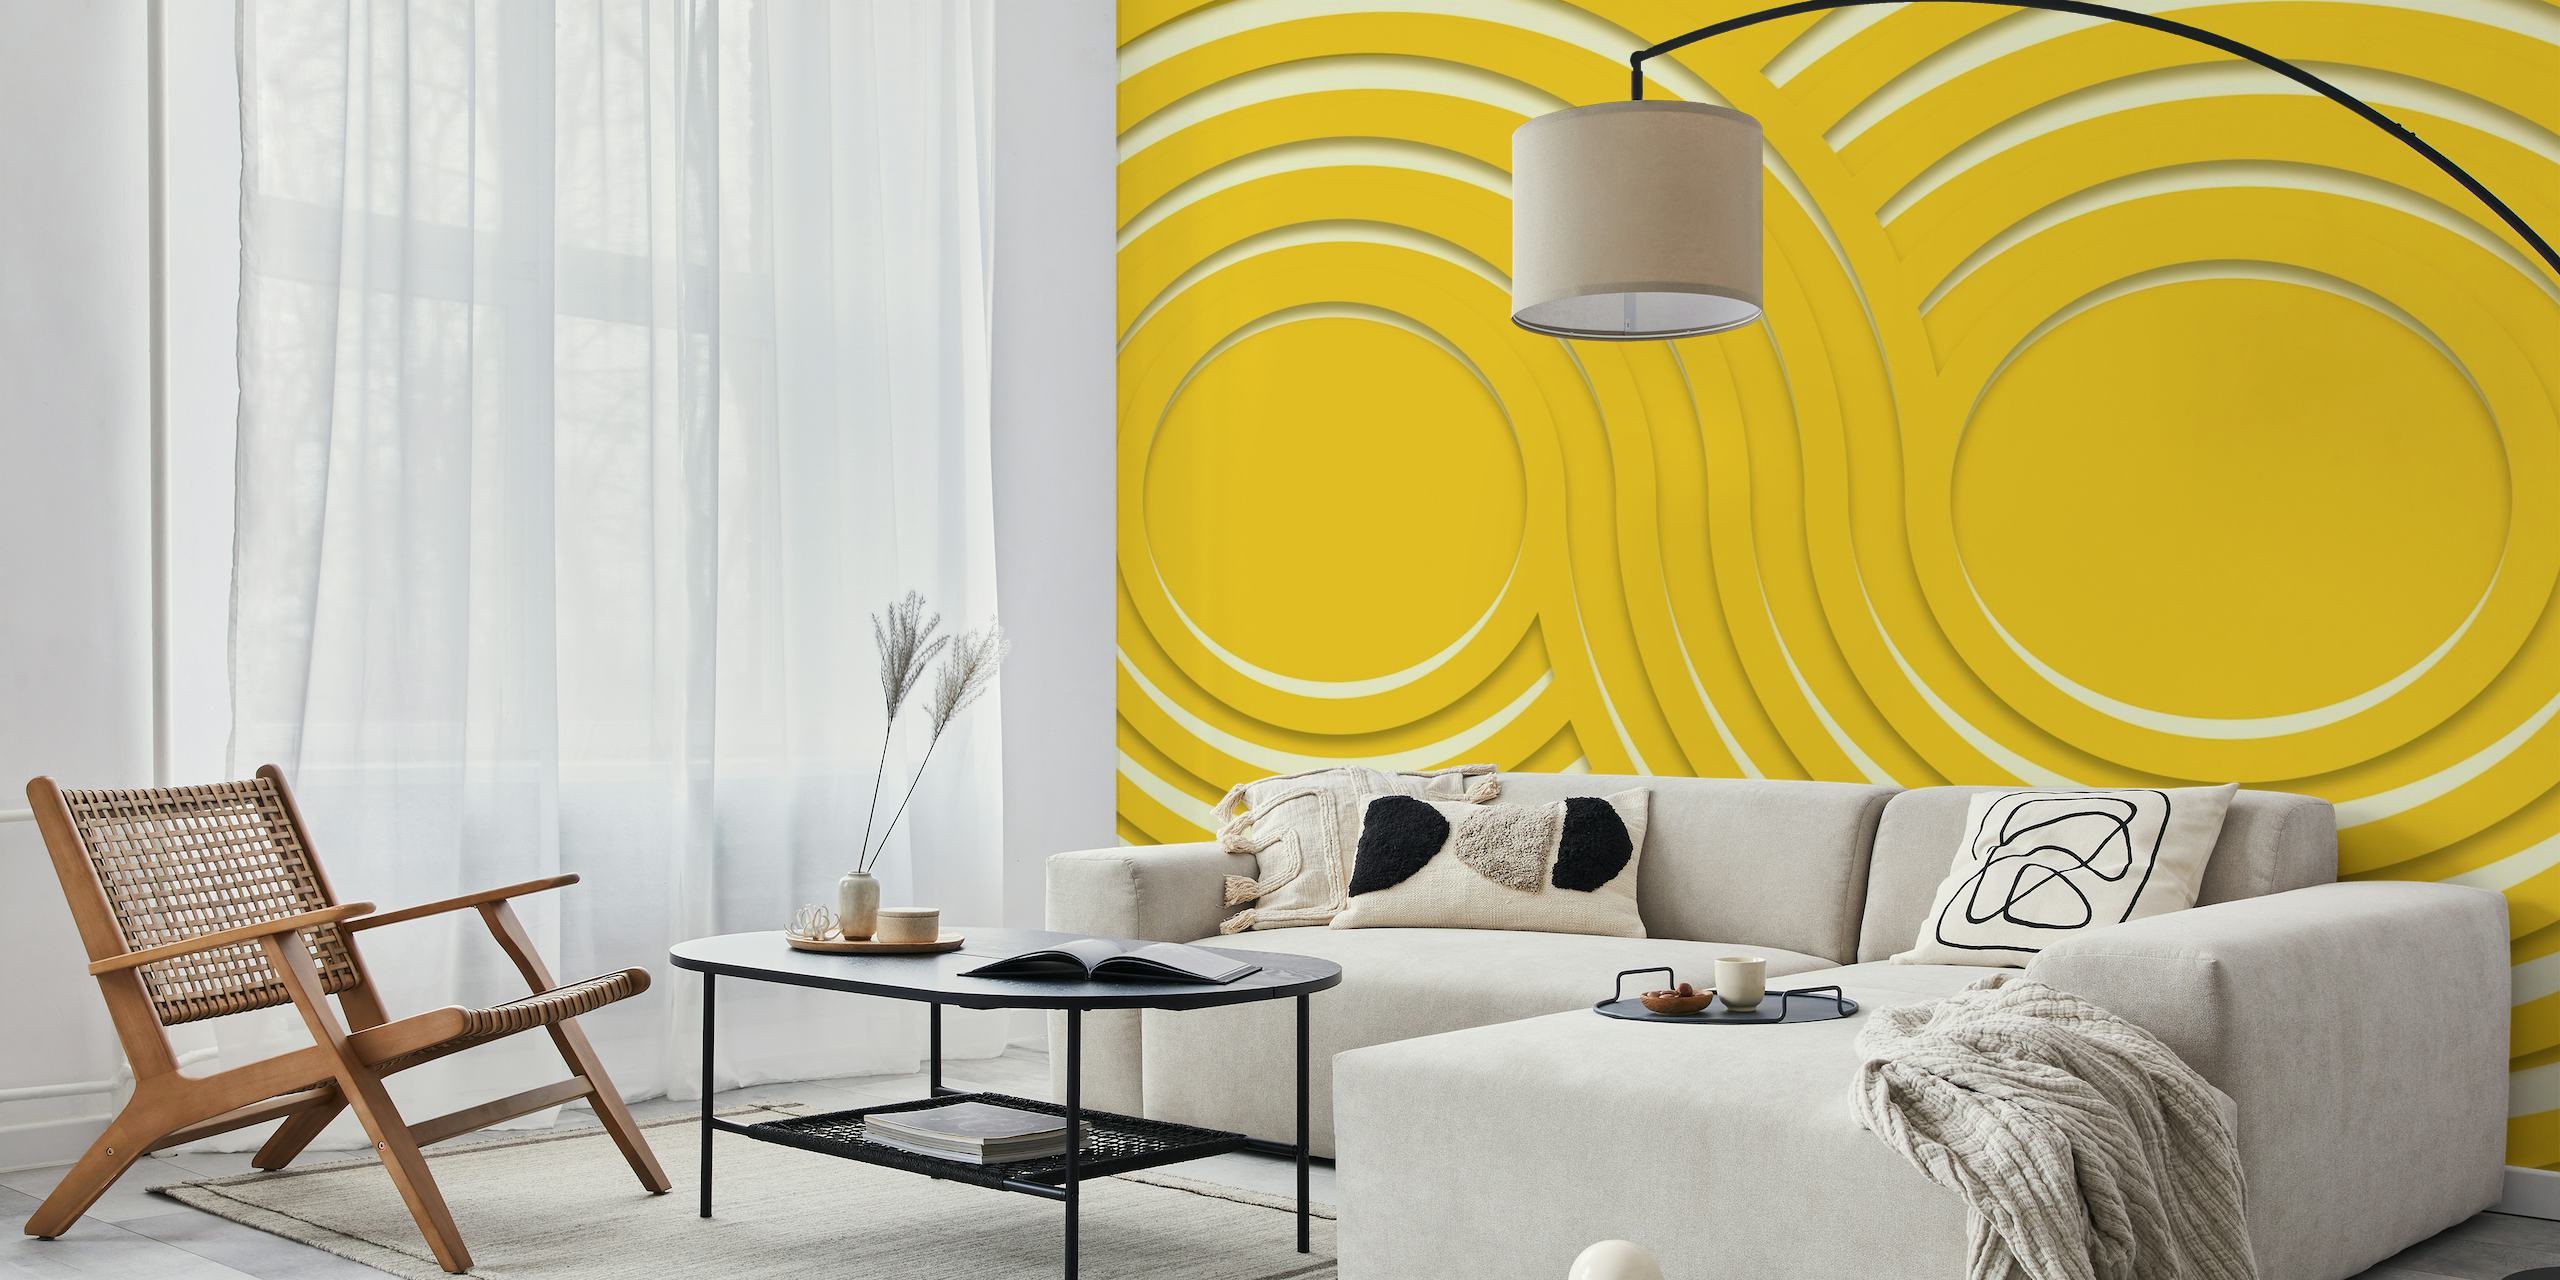 Bauhaus-inspired mid-century modern wall mural featuring yellow undulating waves pattern.